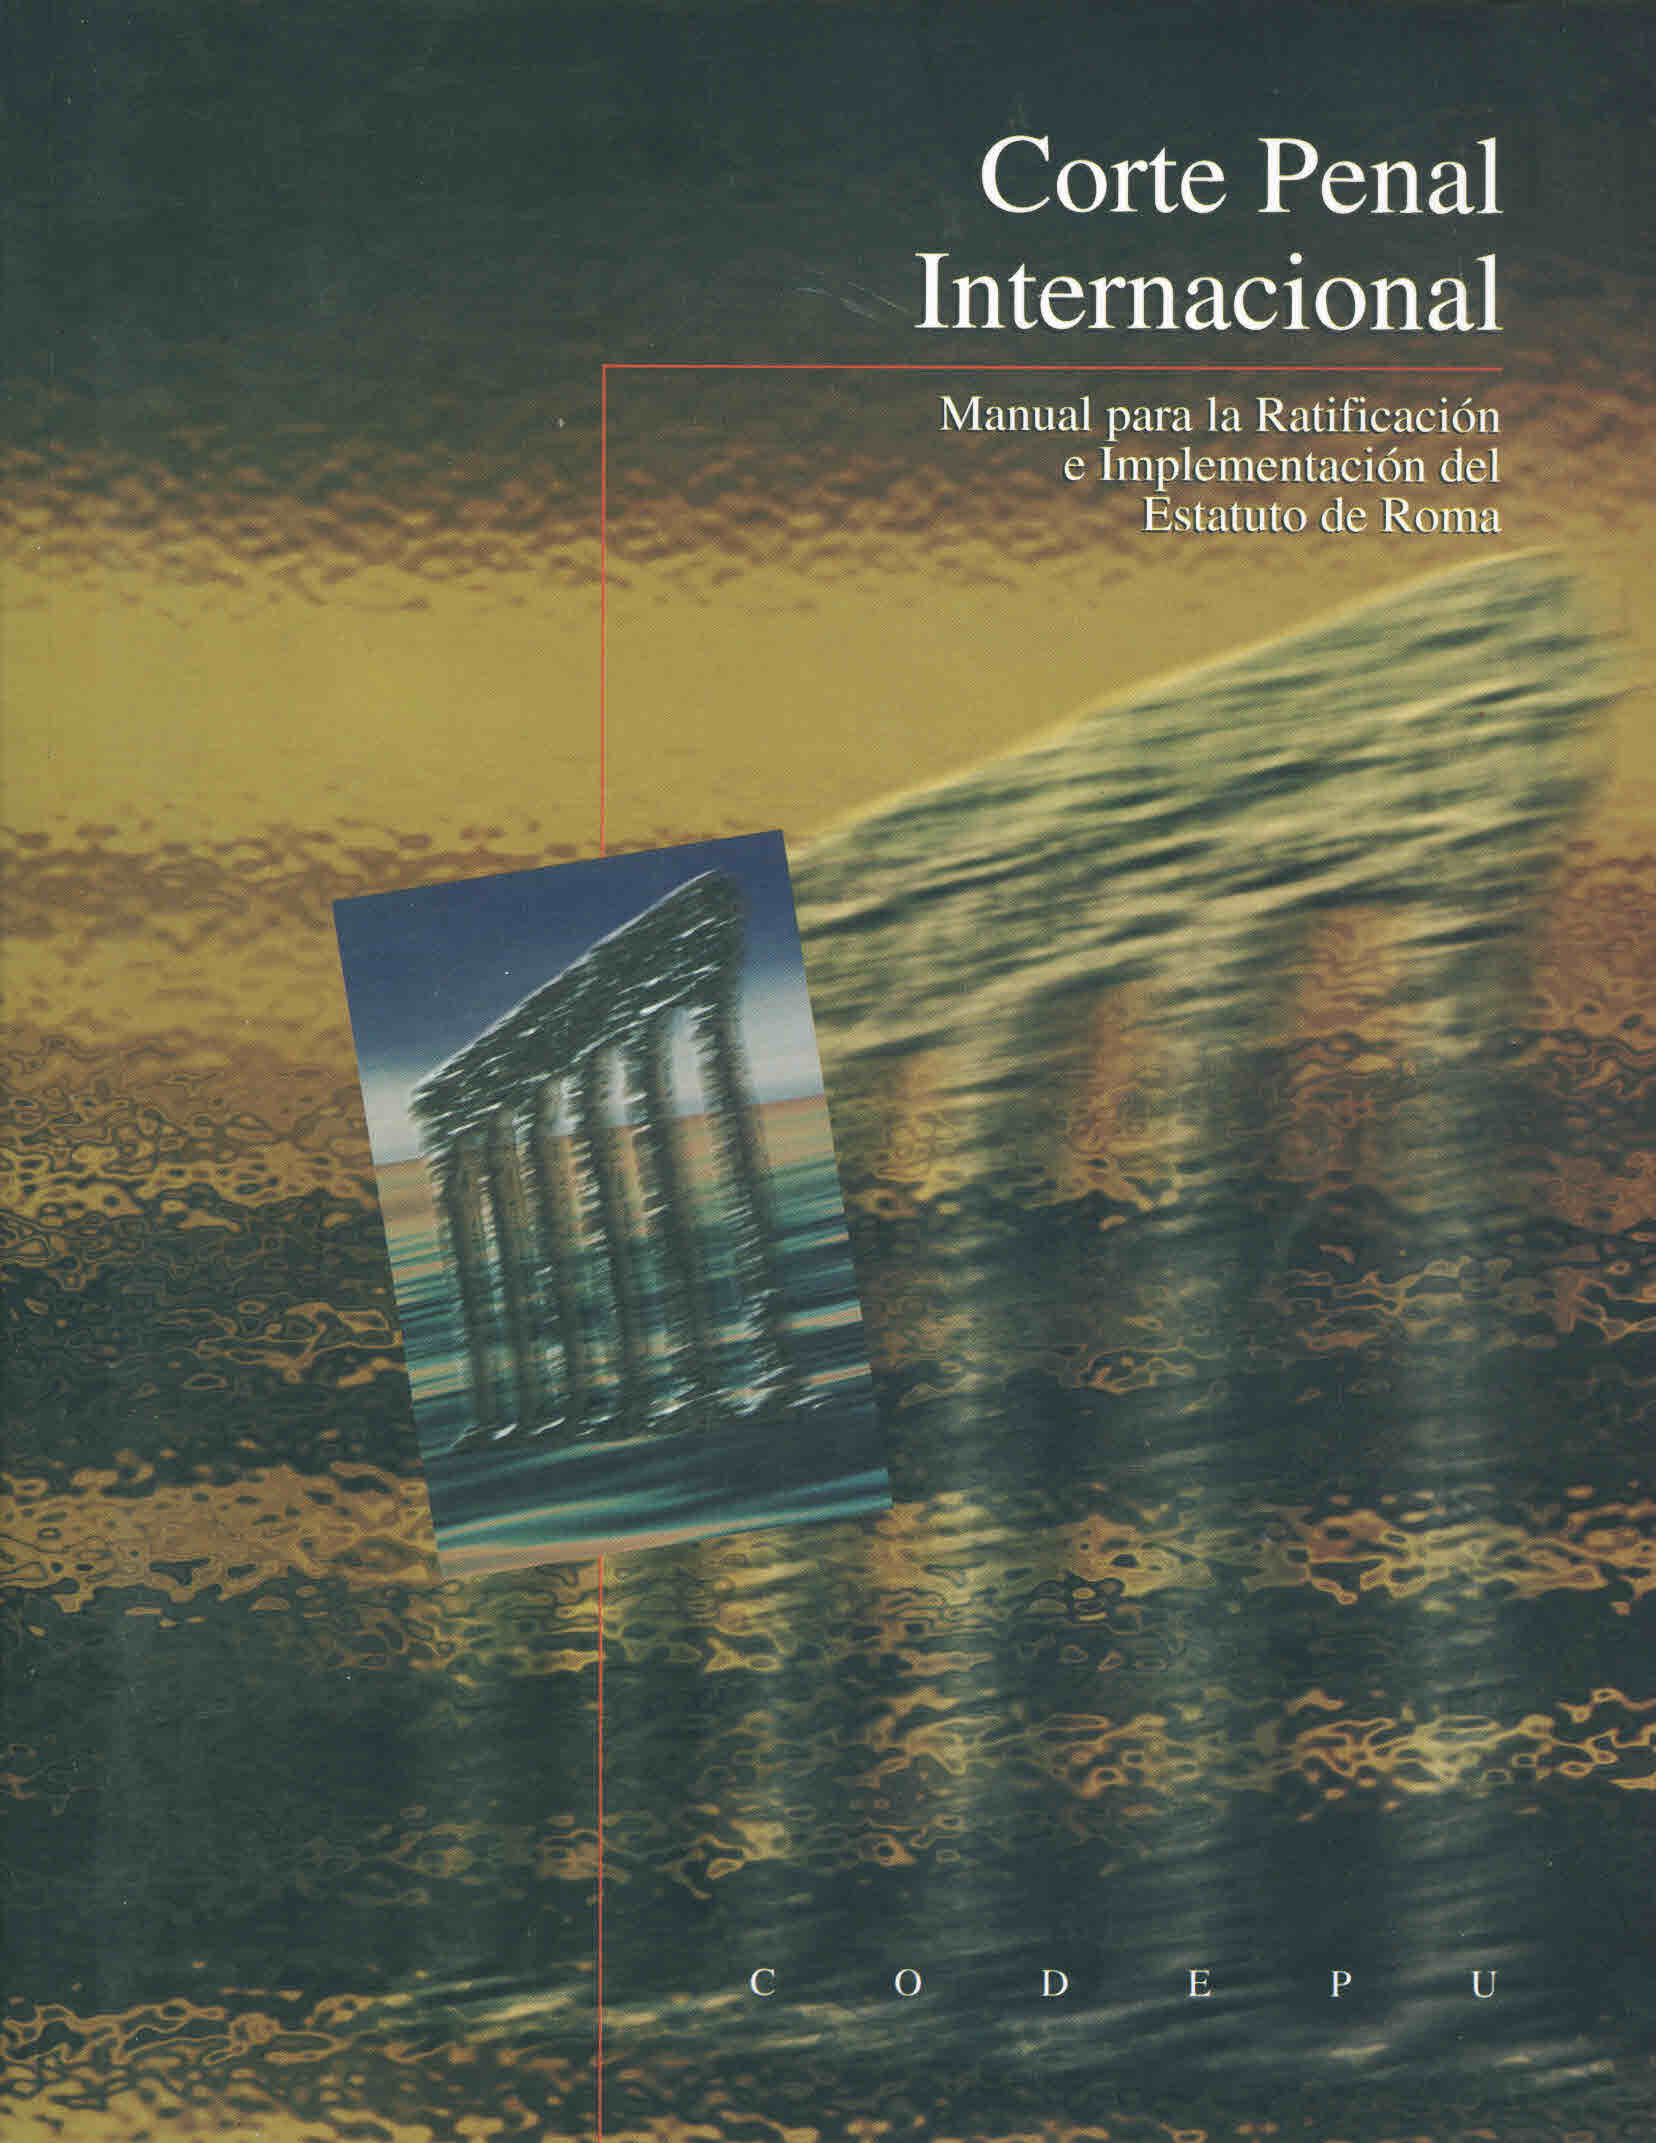 Corte Penal Internacional: Manual para la Ratificación e Implementación del Estatuto de Roma